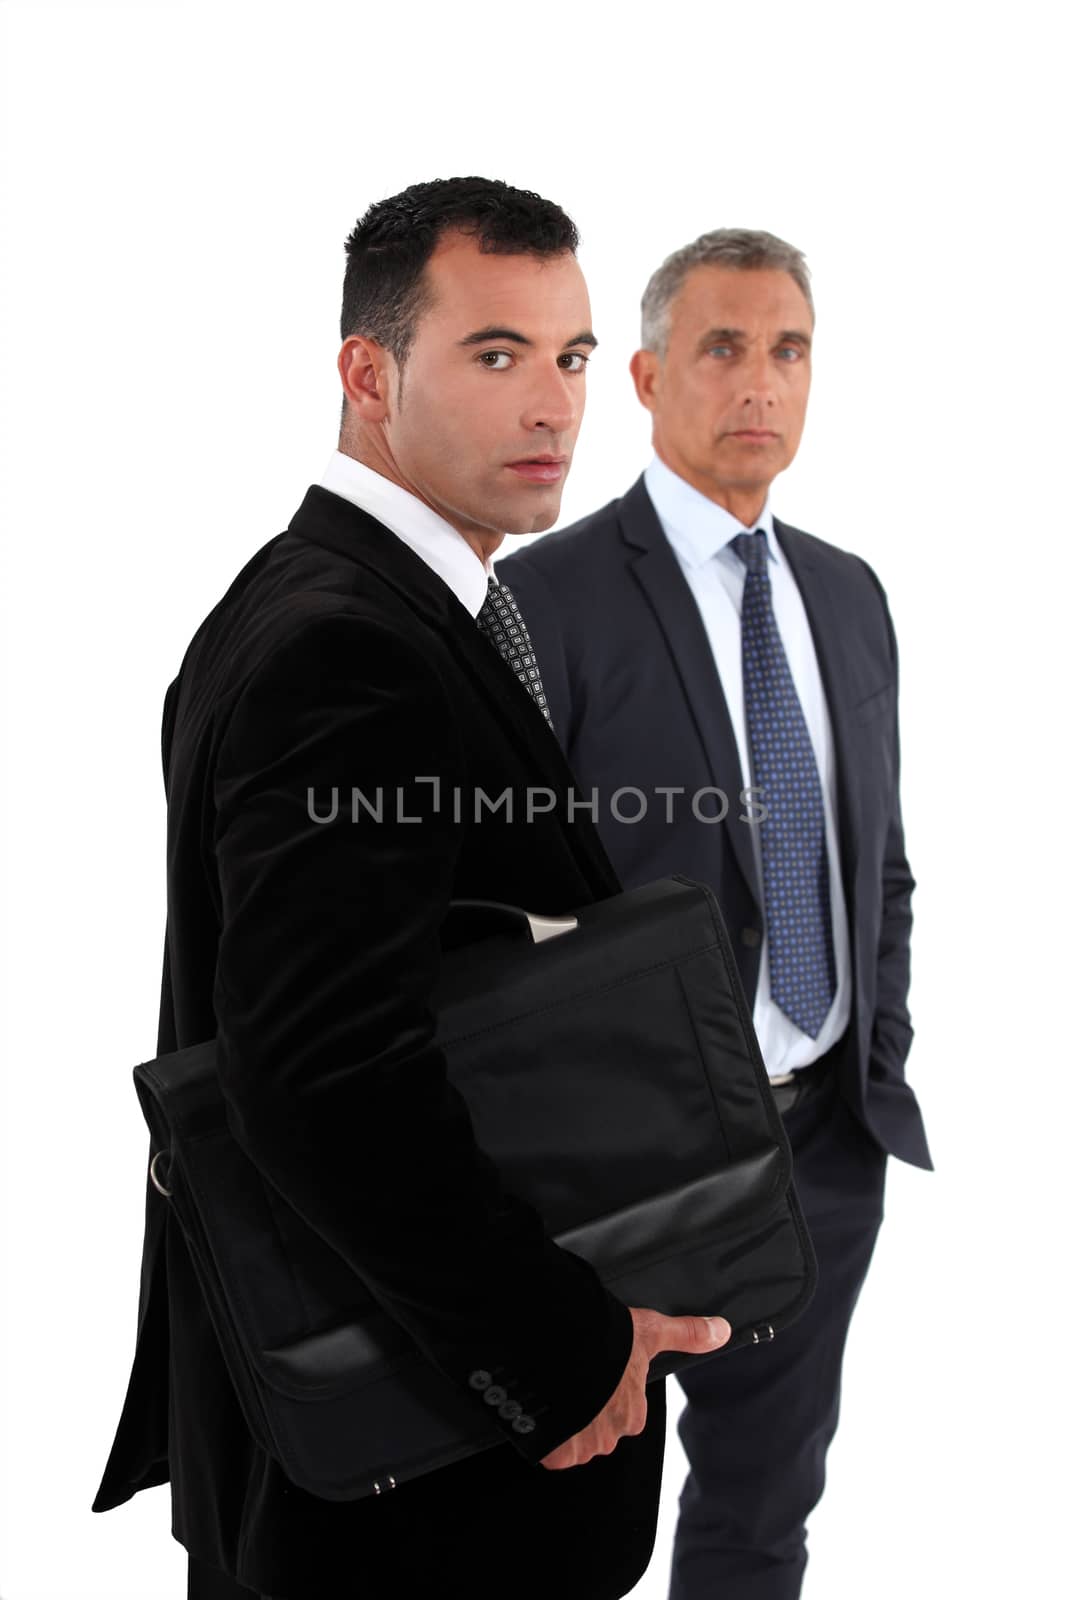 Two businessmen, studio shot by phovoir